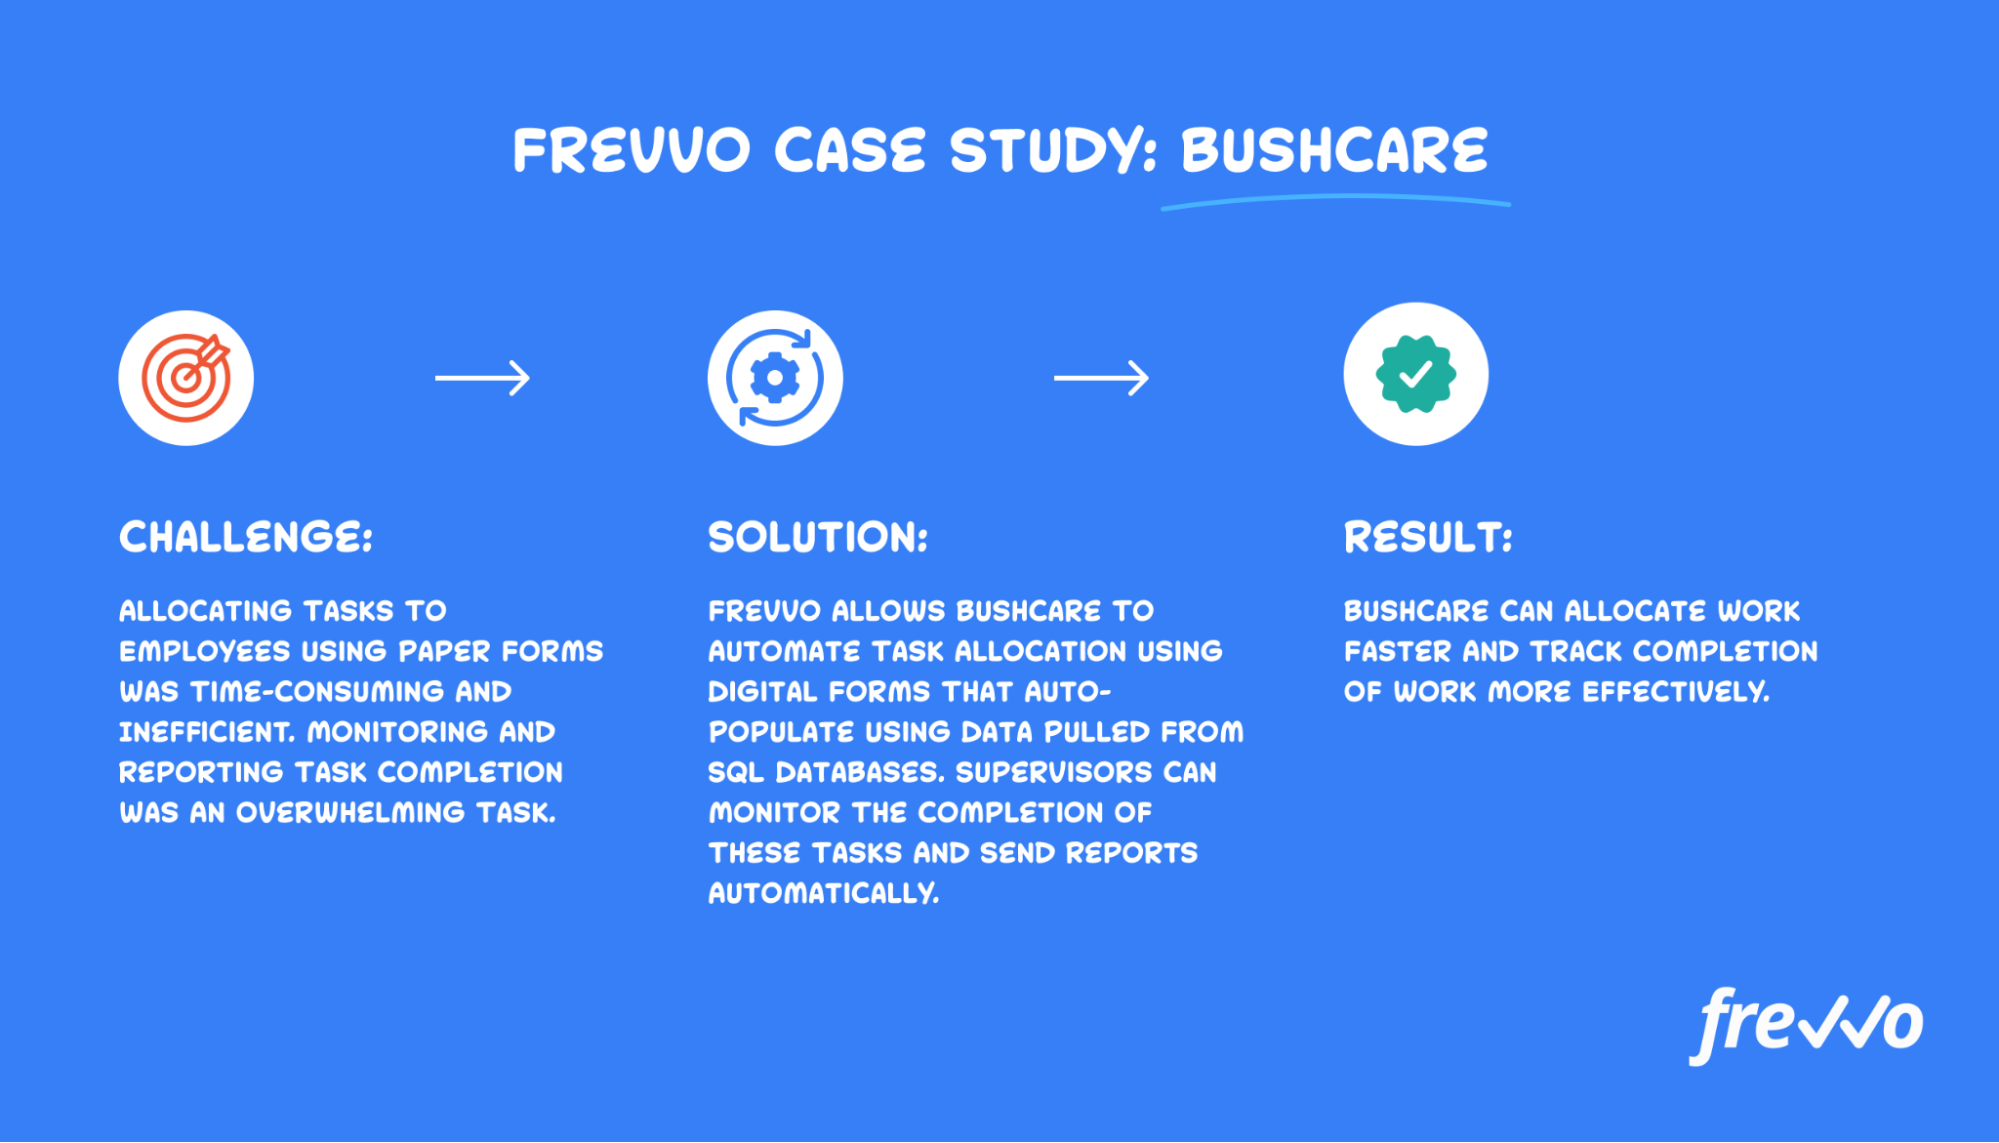 Bushcare case study using frevvo